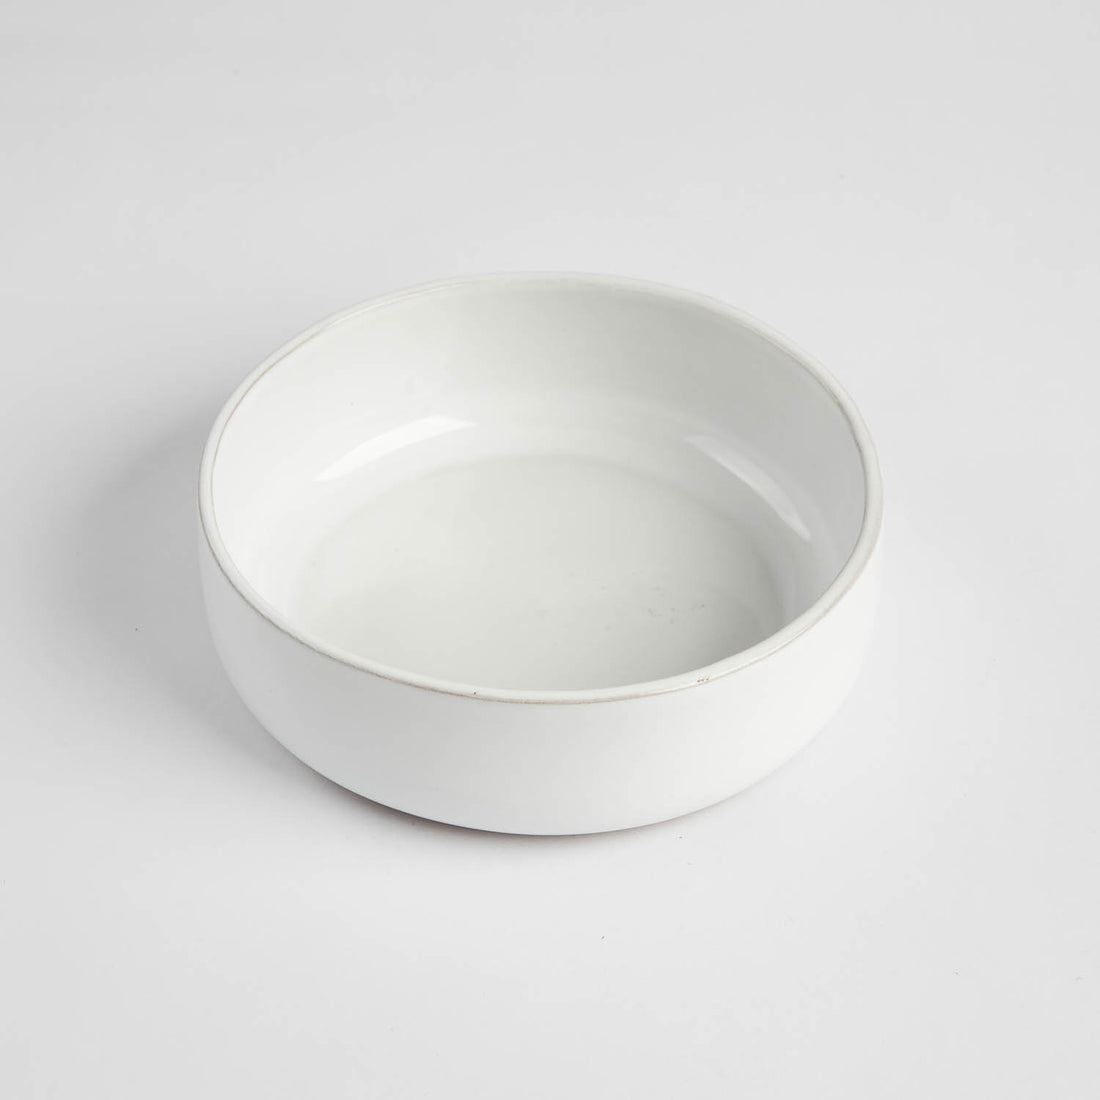 White Glaze Ceramic Bowl (Set of 2)